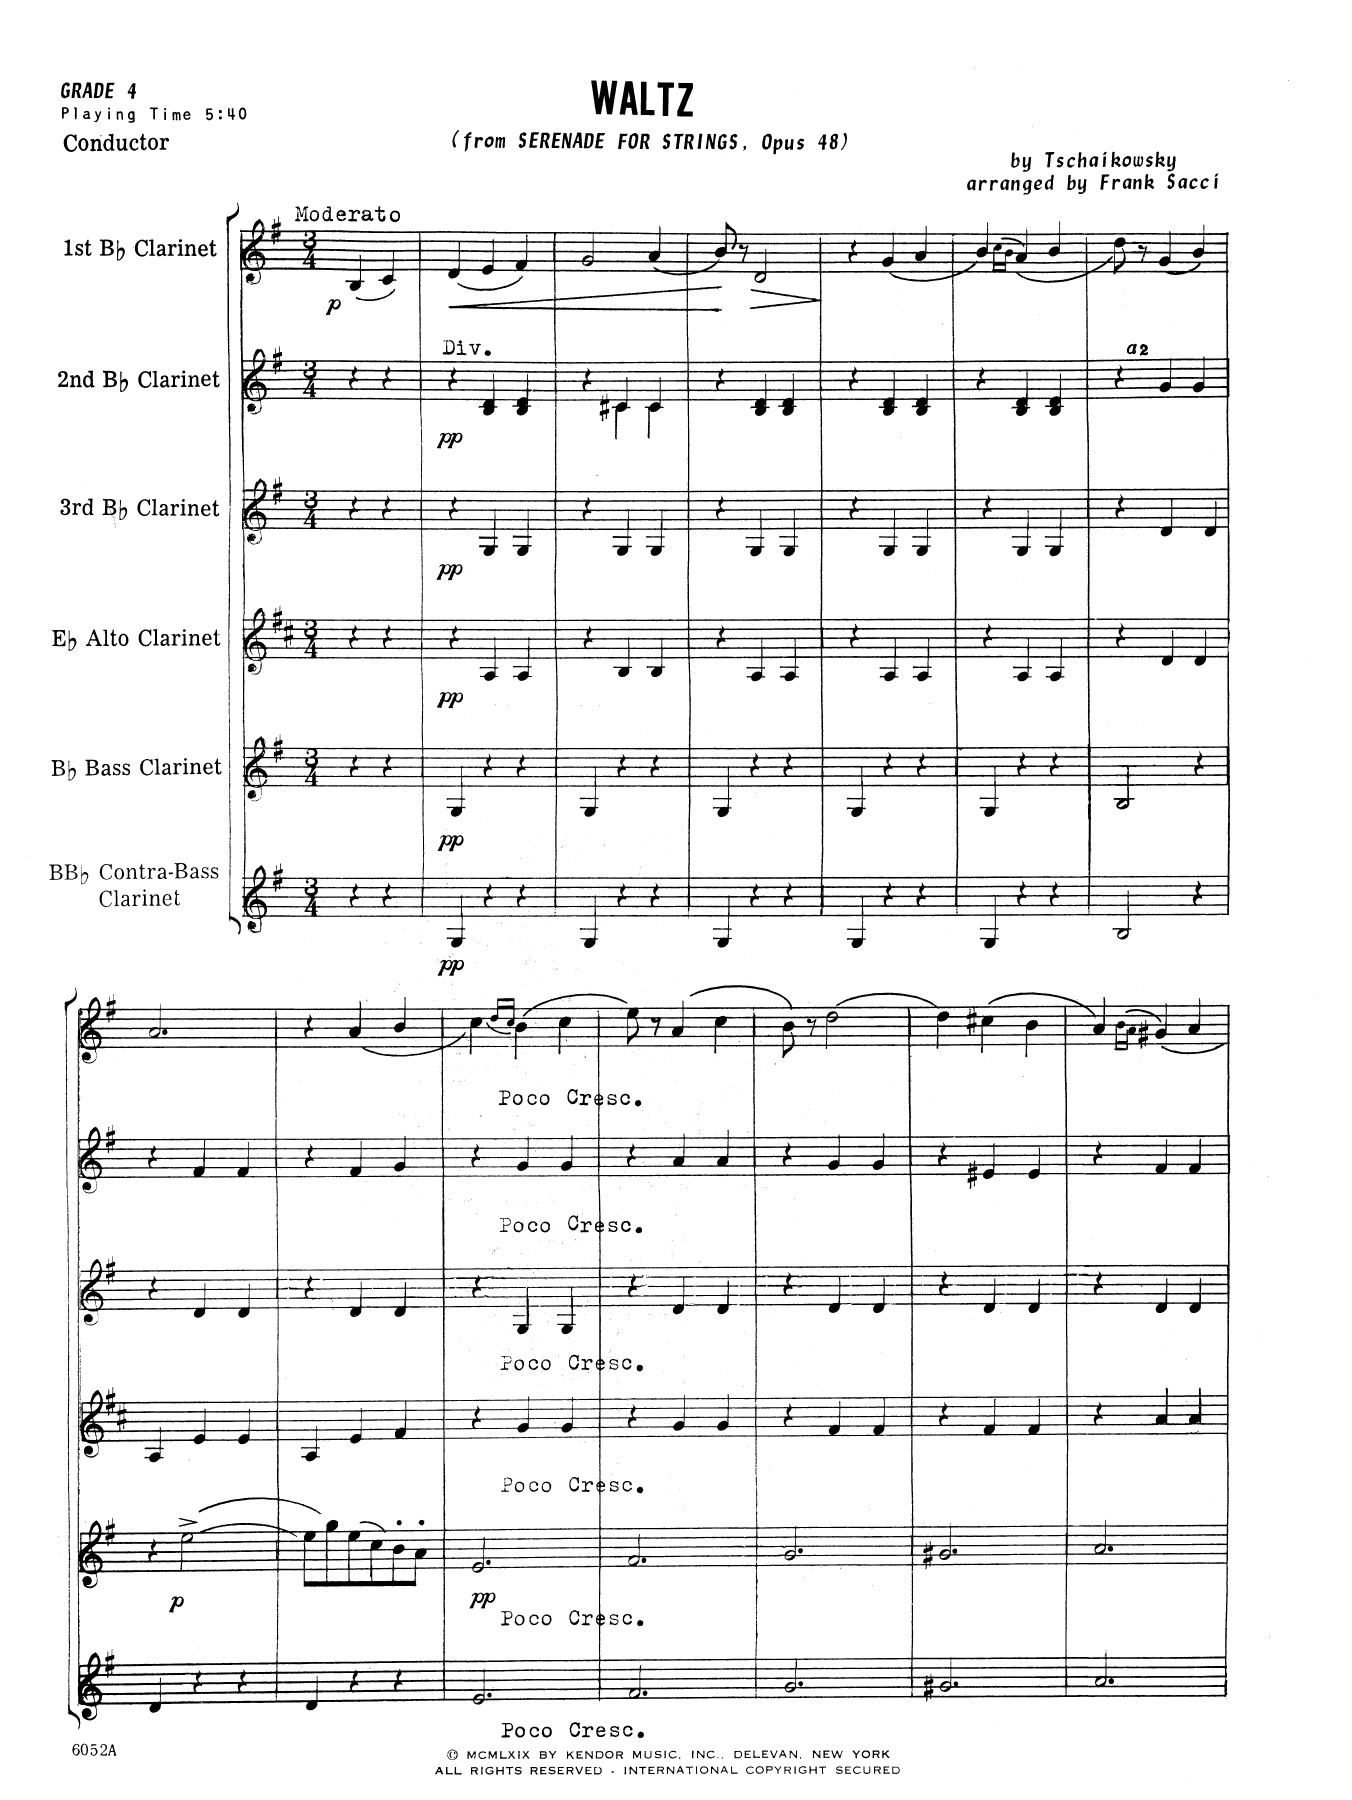 Waltz From Serenade For Strings Op. 48 - Full Score (Woodwind Ensemble) von Frank Sacci